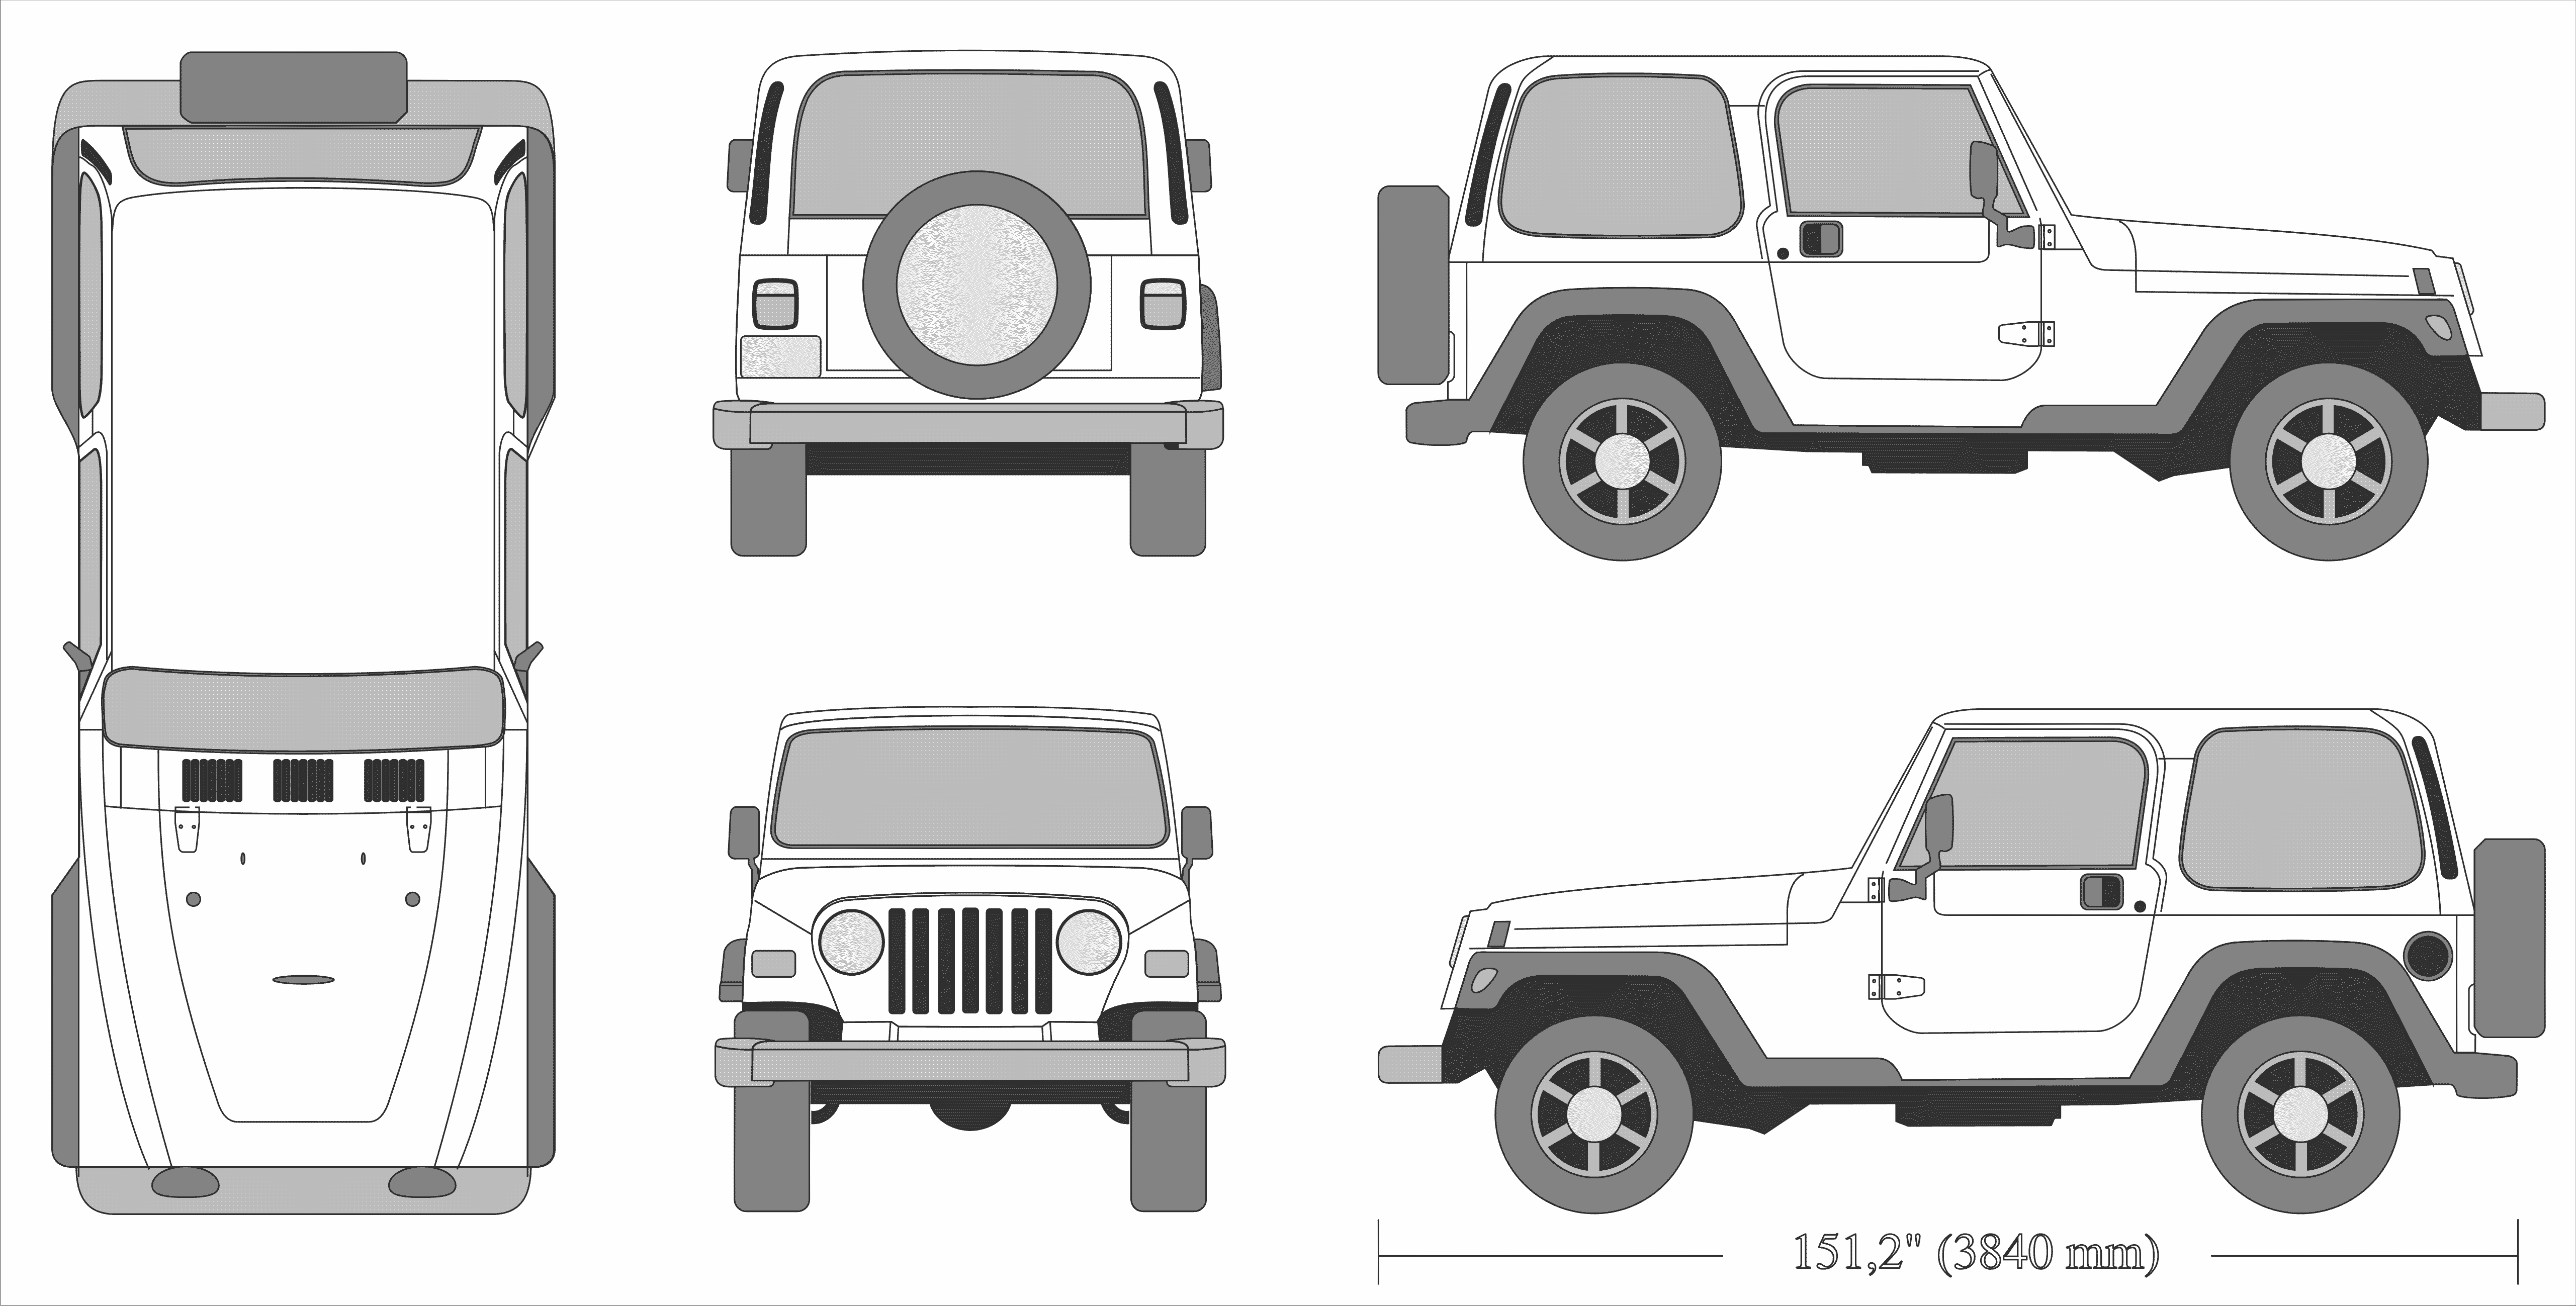 Jeep Wrangler blueprint